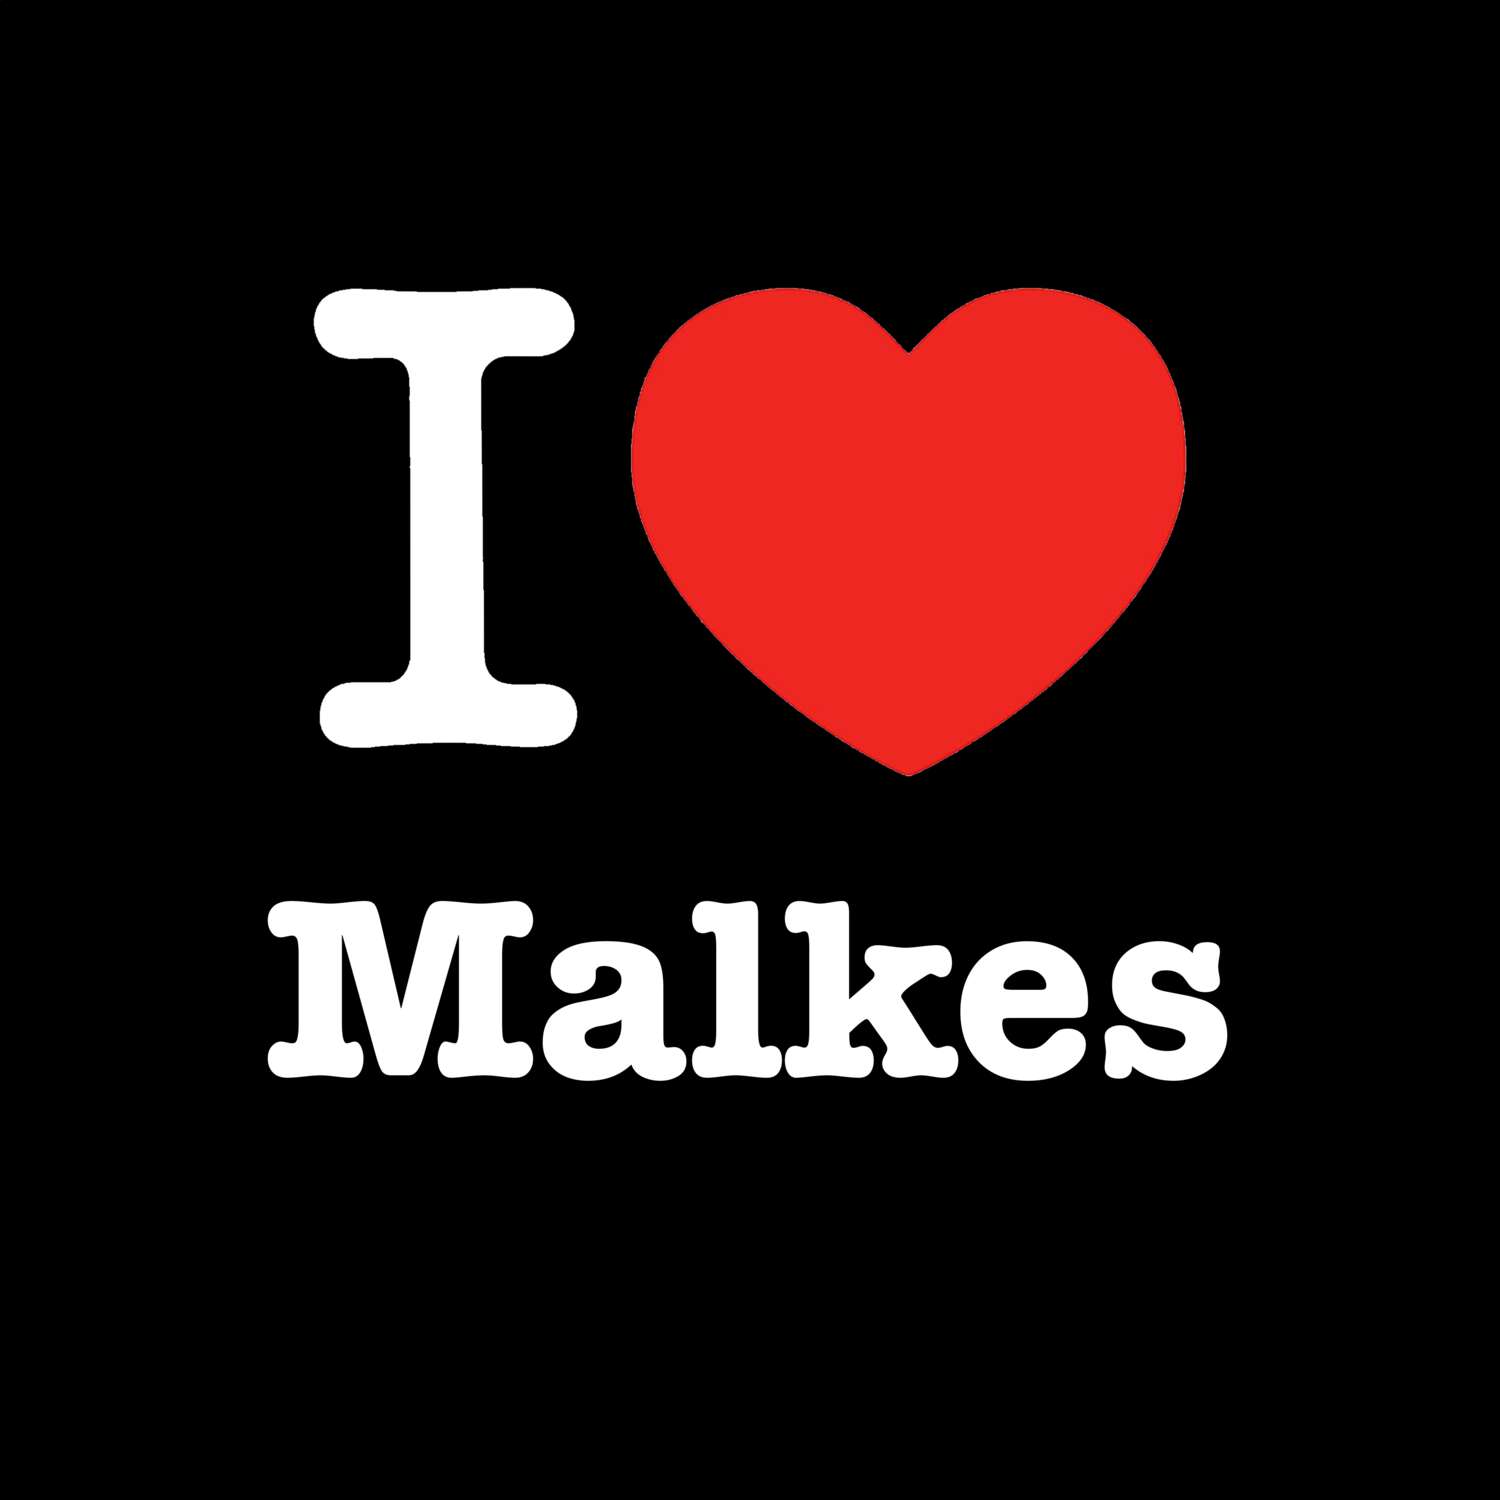 Malkes T-Shirt »I love«